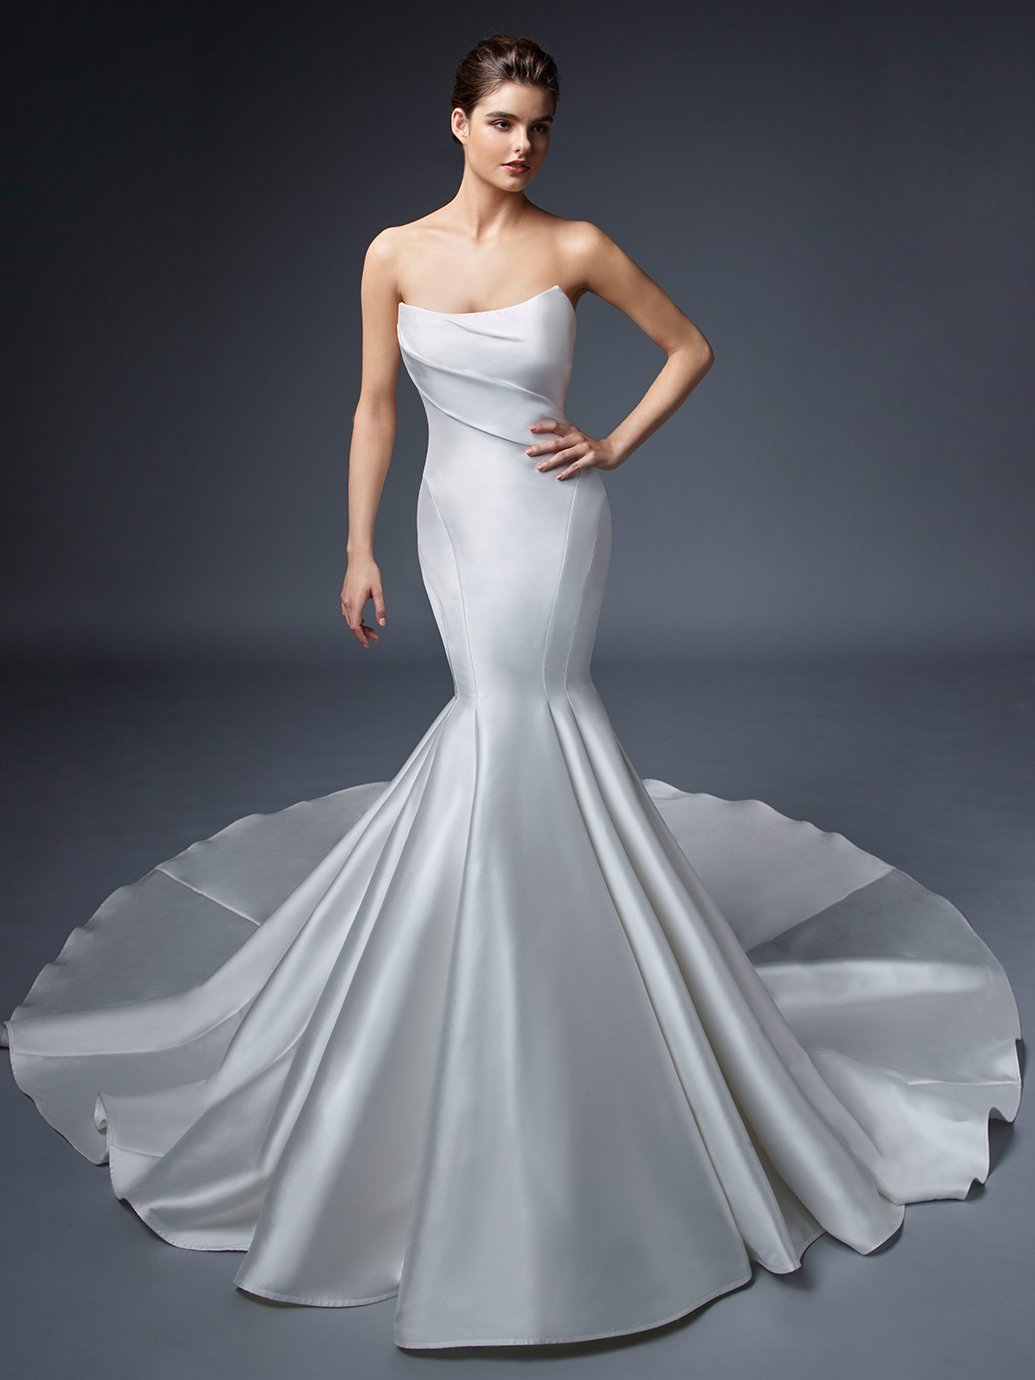 blanc-de-blanc-bridal-boutique-cleveland-dress-wedding-gown-elysee-seraphine.jpg